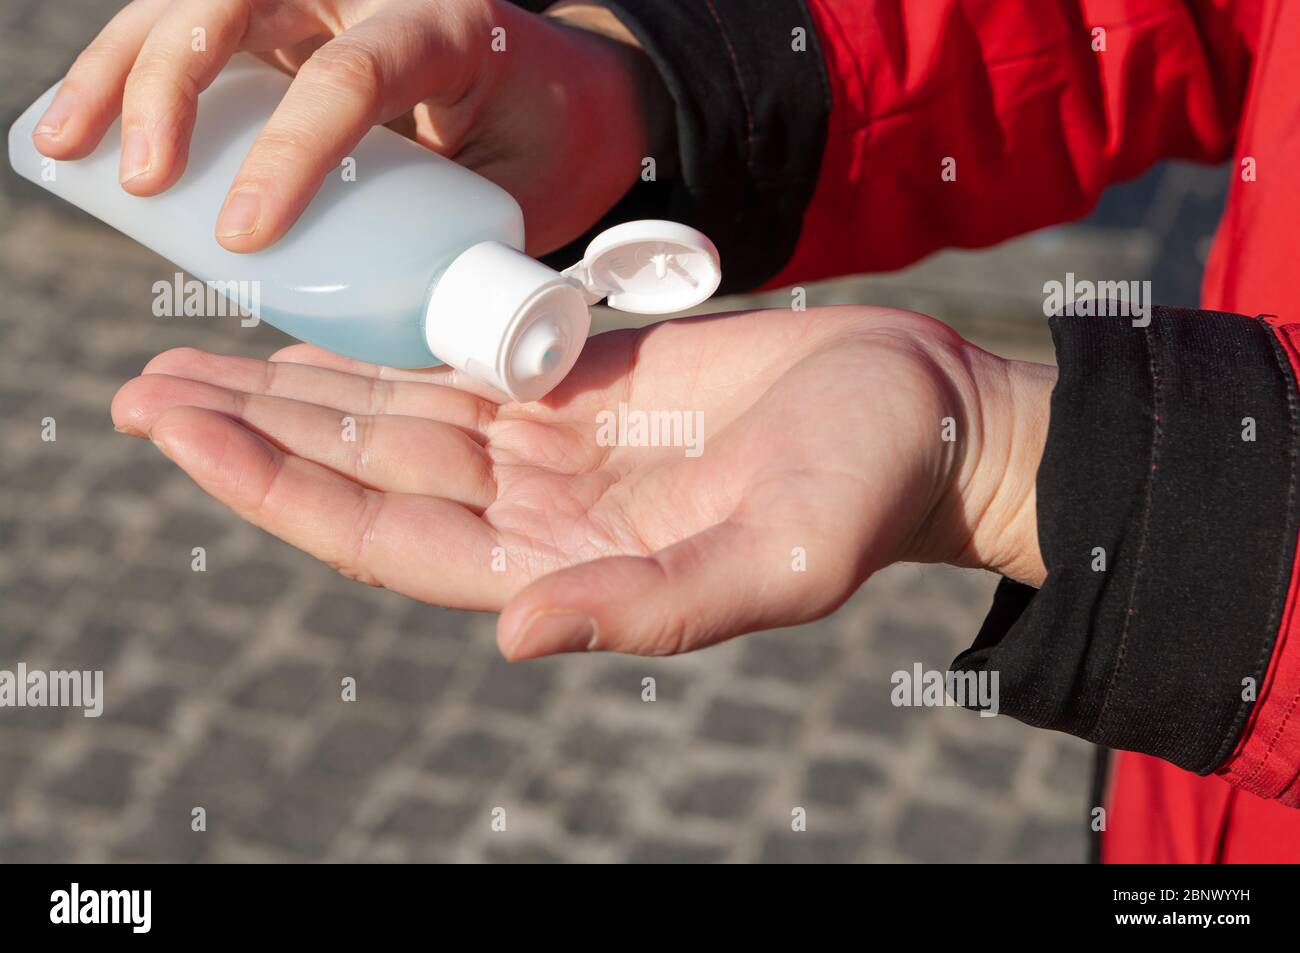 Women's hands using wash hand sanitizer gel. Stock Photo